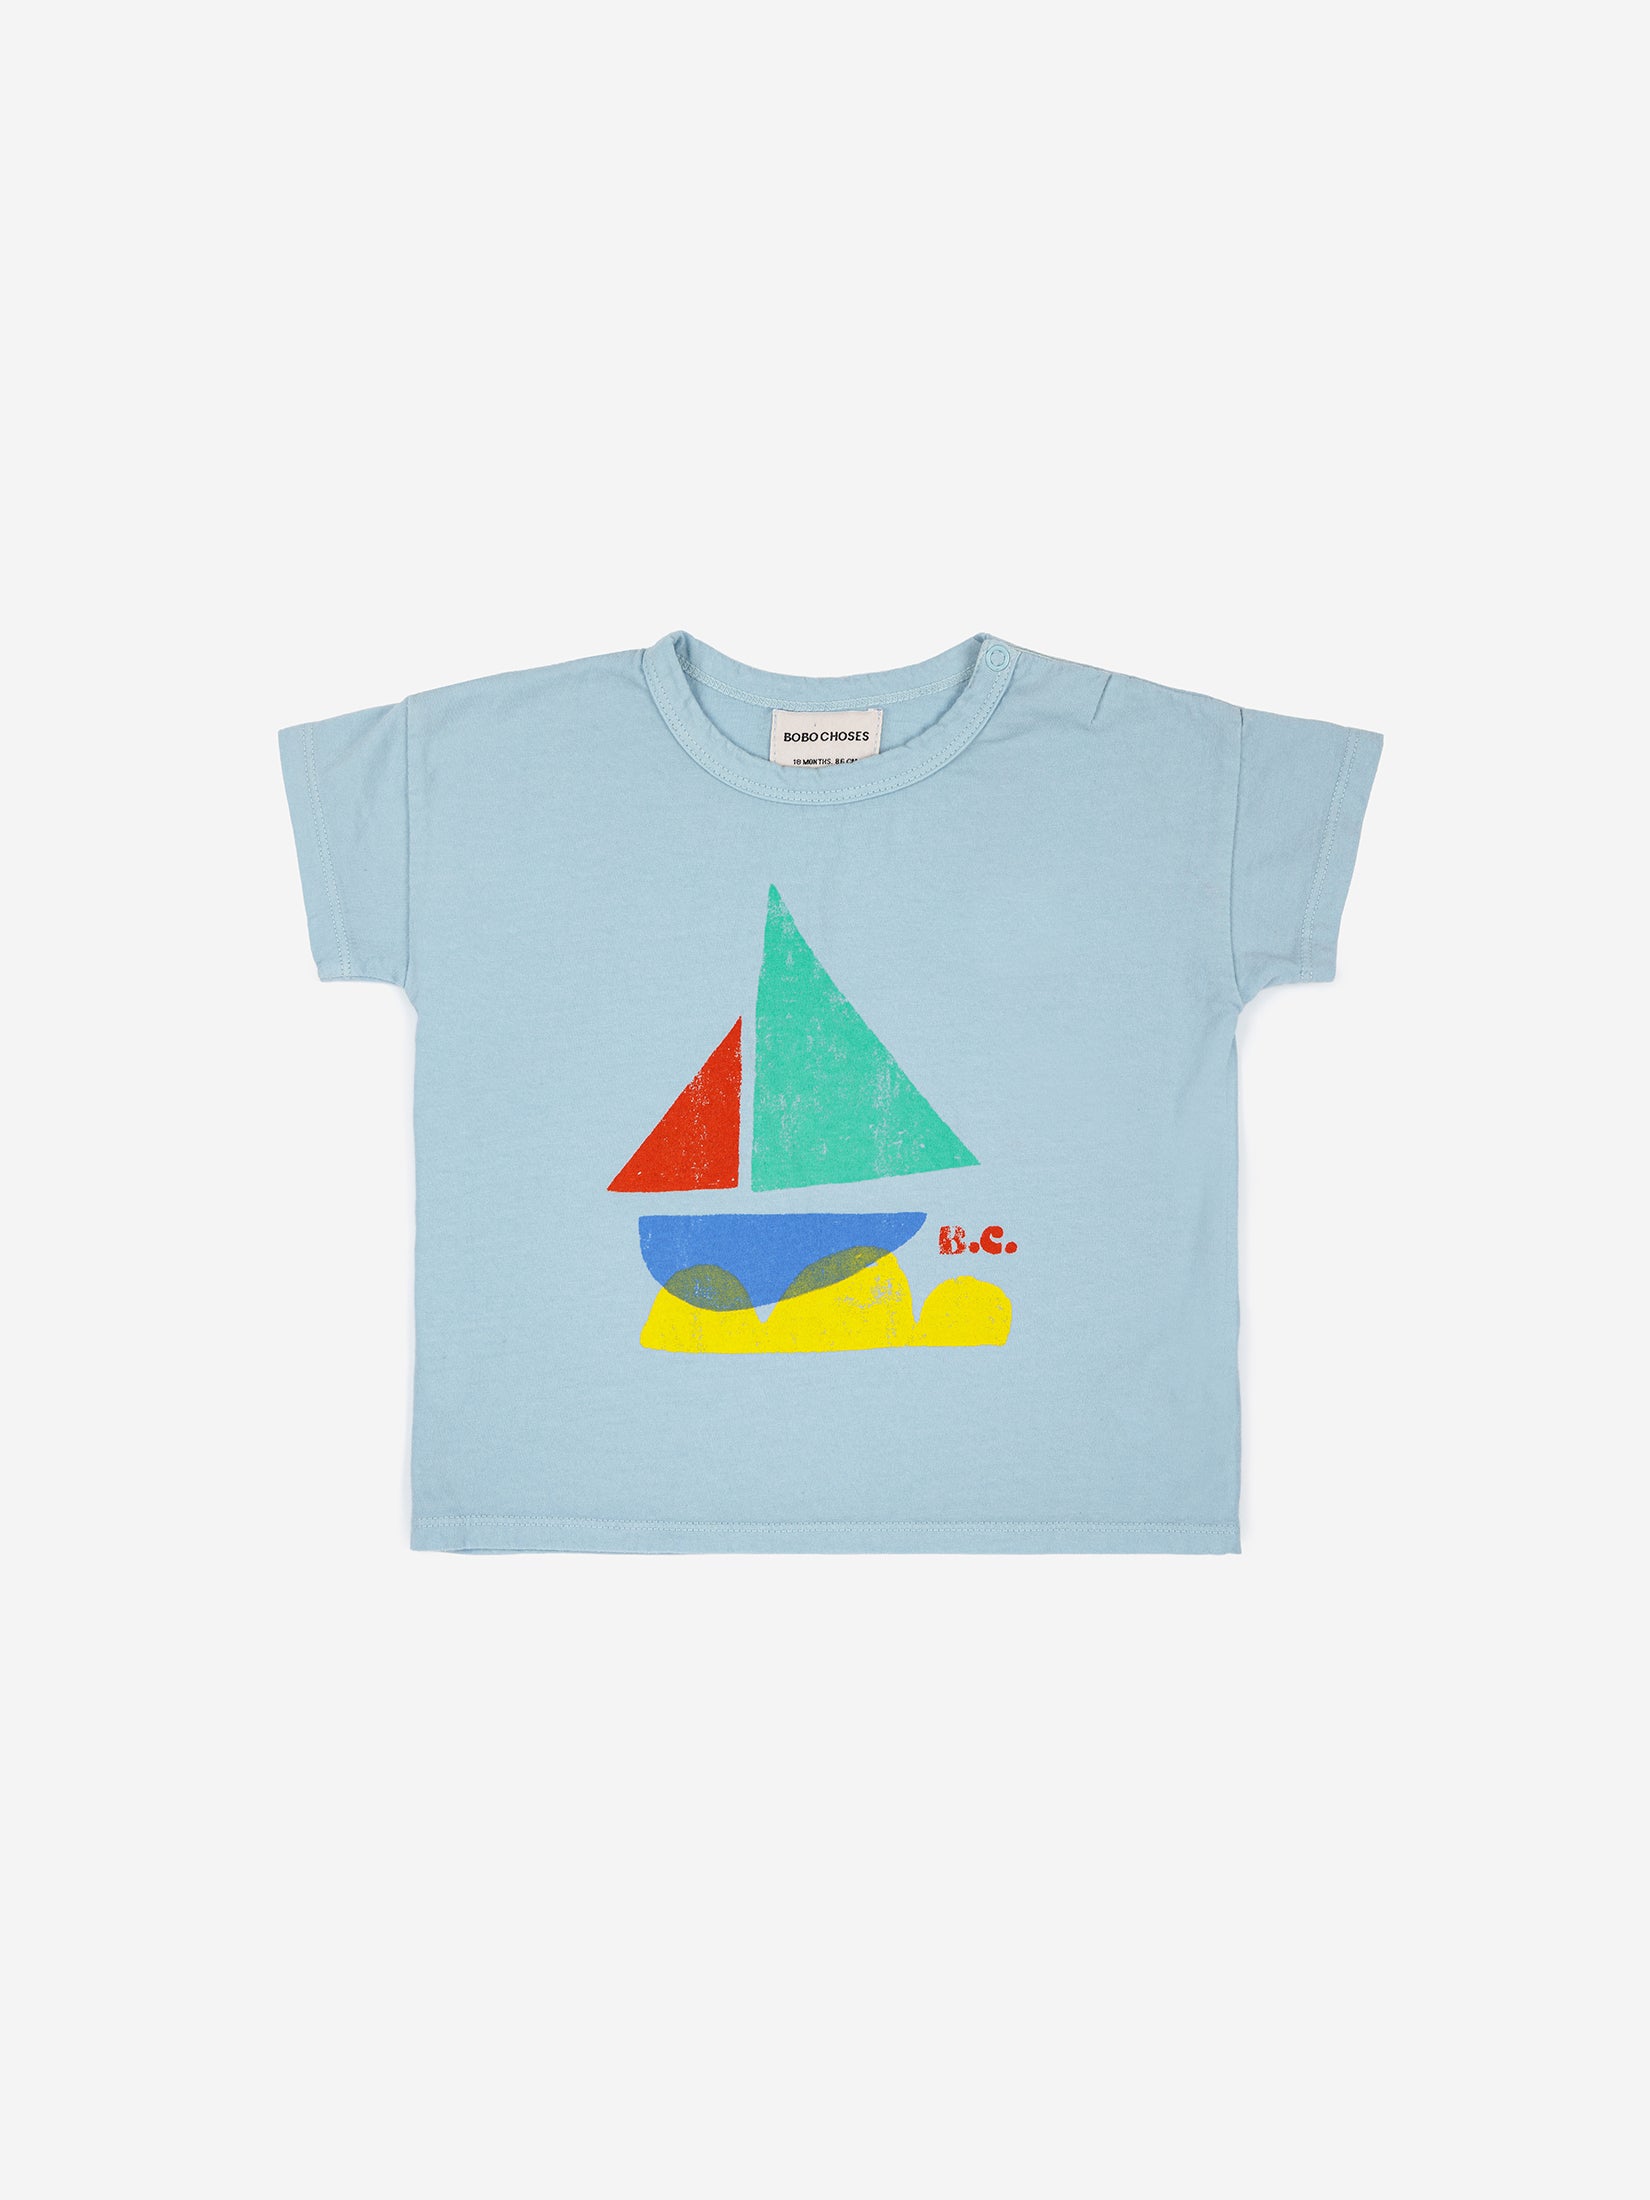 Sail Boat Cotton Short Sleeve Baby Tee